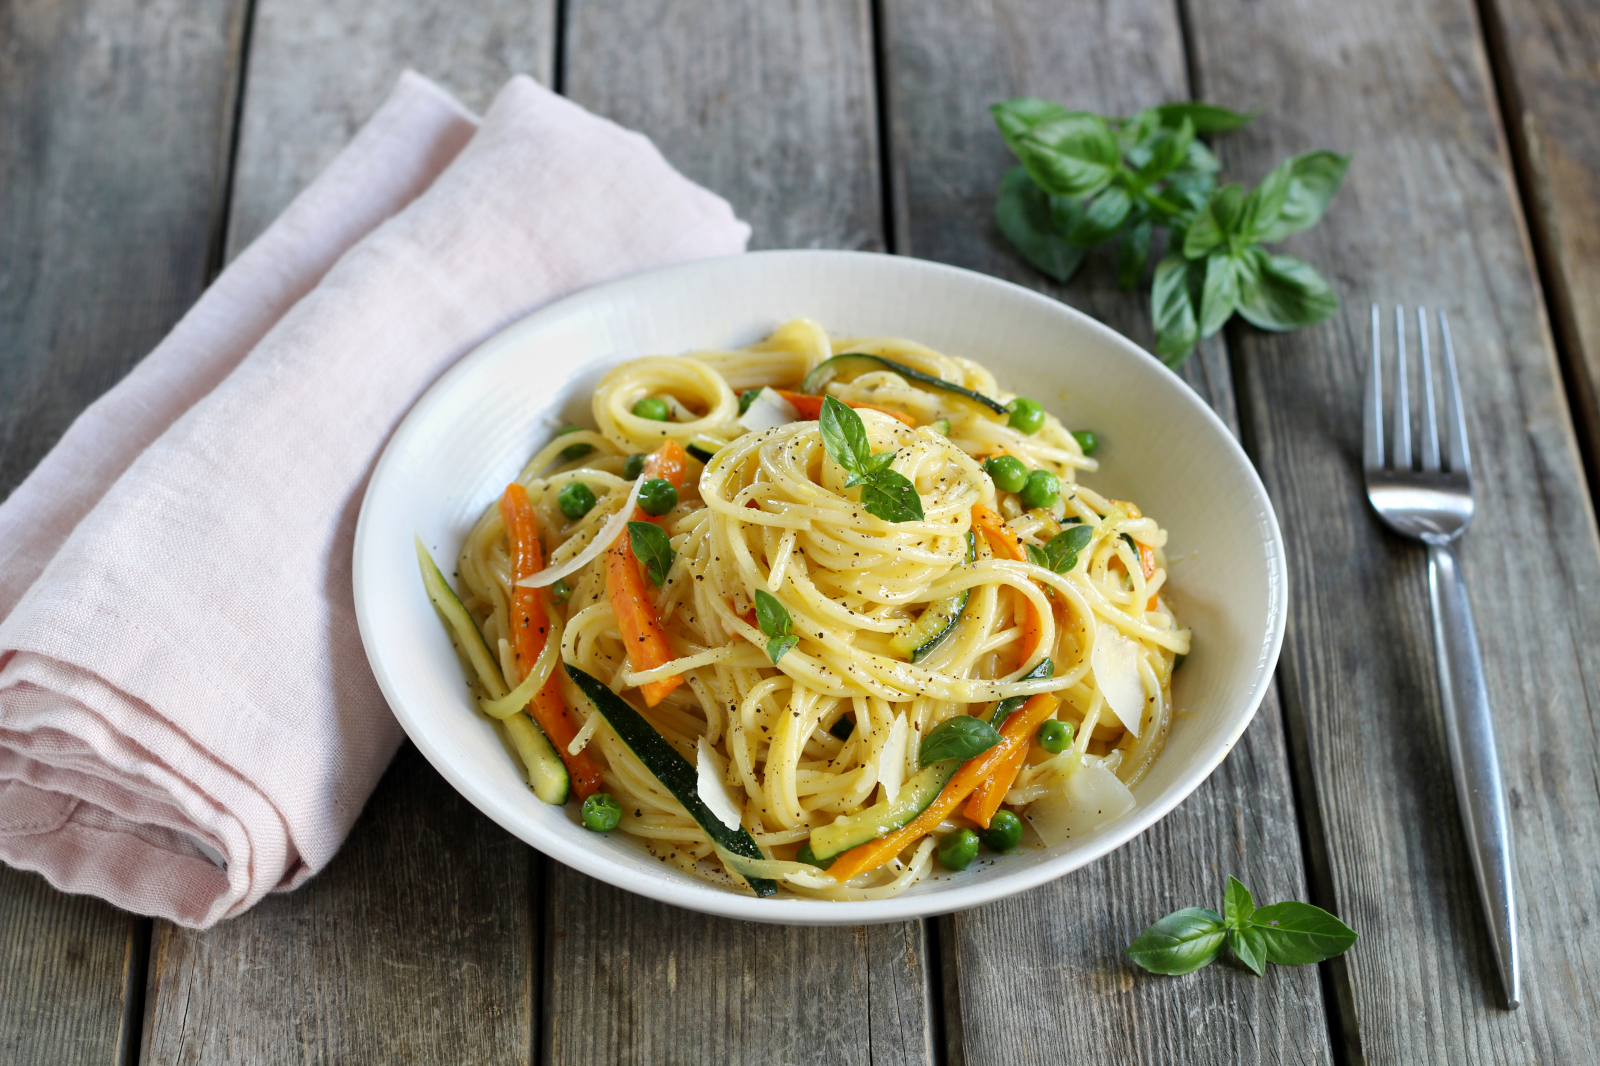 &amp;quot;Carbonara&amp;quot; mal anders: Spaghetti mit Gemüse, Ei und Parmesan